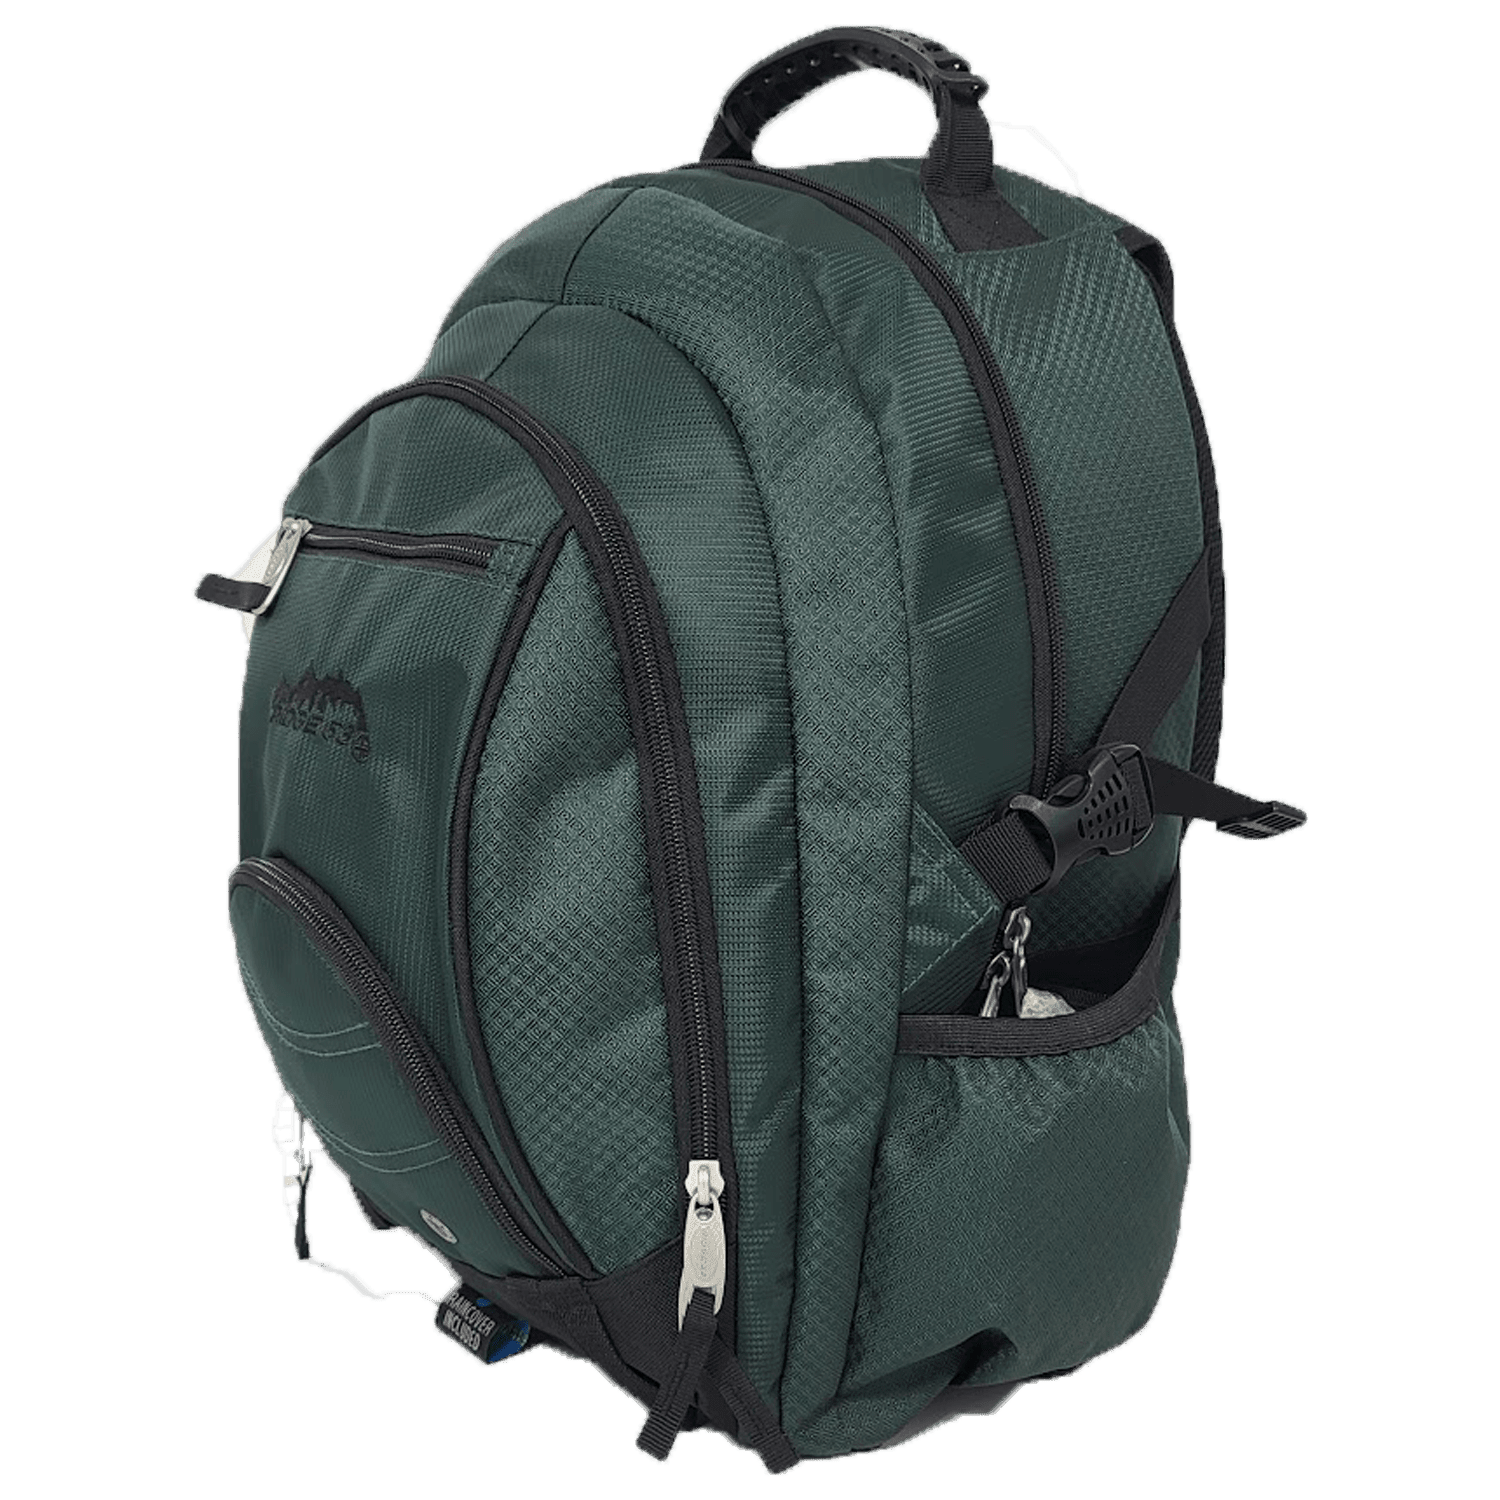 Sportech Ridge 53 – Bolton Backpack - Racing Green 2 Shaws Department Stores